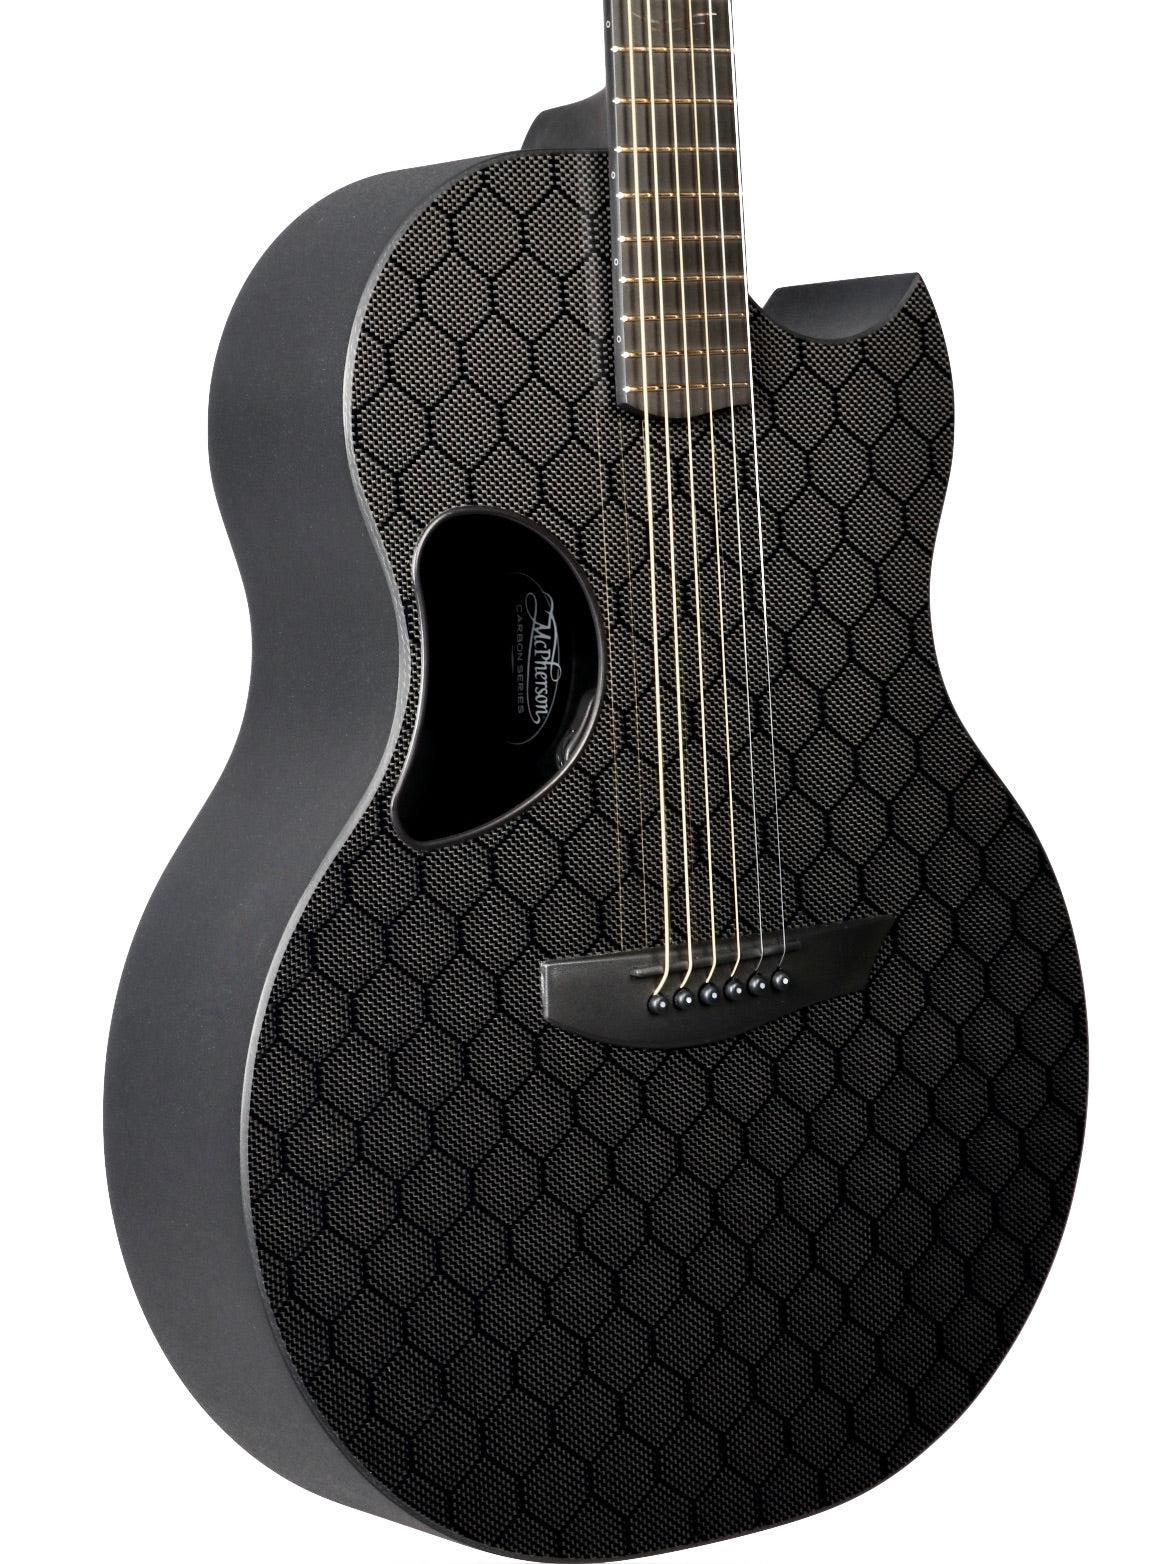 McPherson Carbon Fiber Sable Blackout Honeycomb Finish #11430 - McPherson Guitars - Heartbreaker Guitars